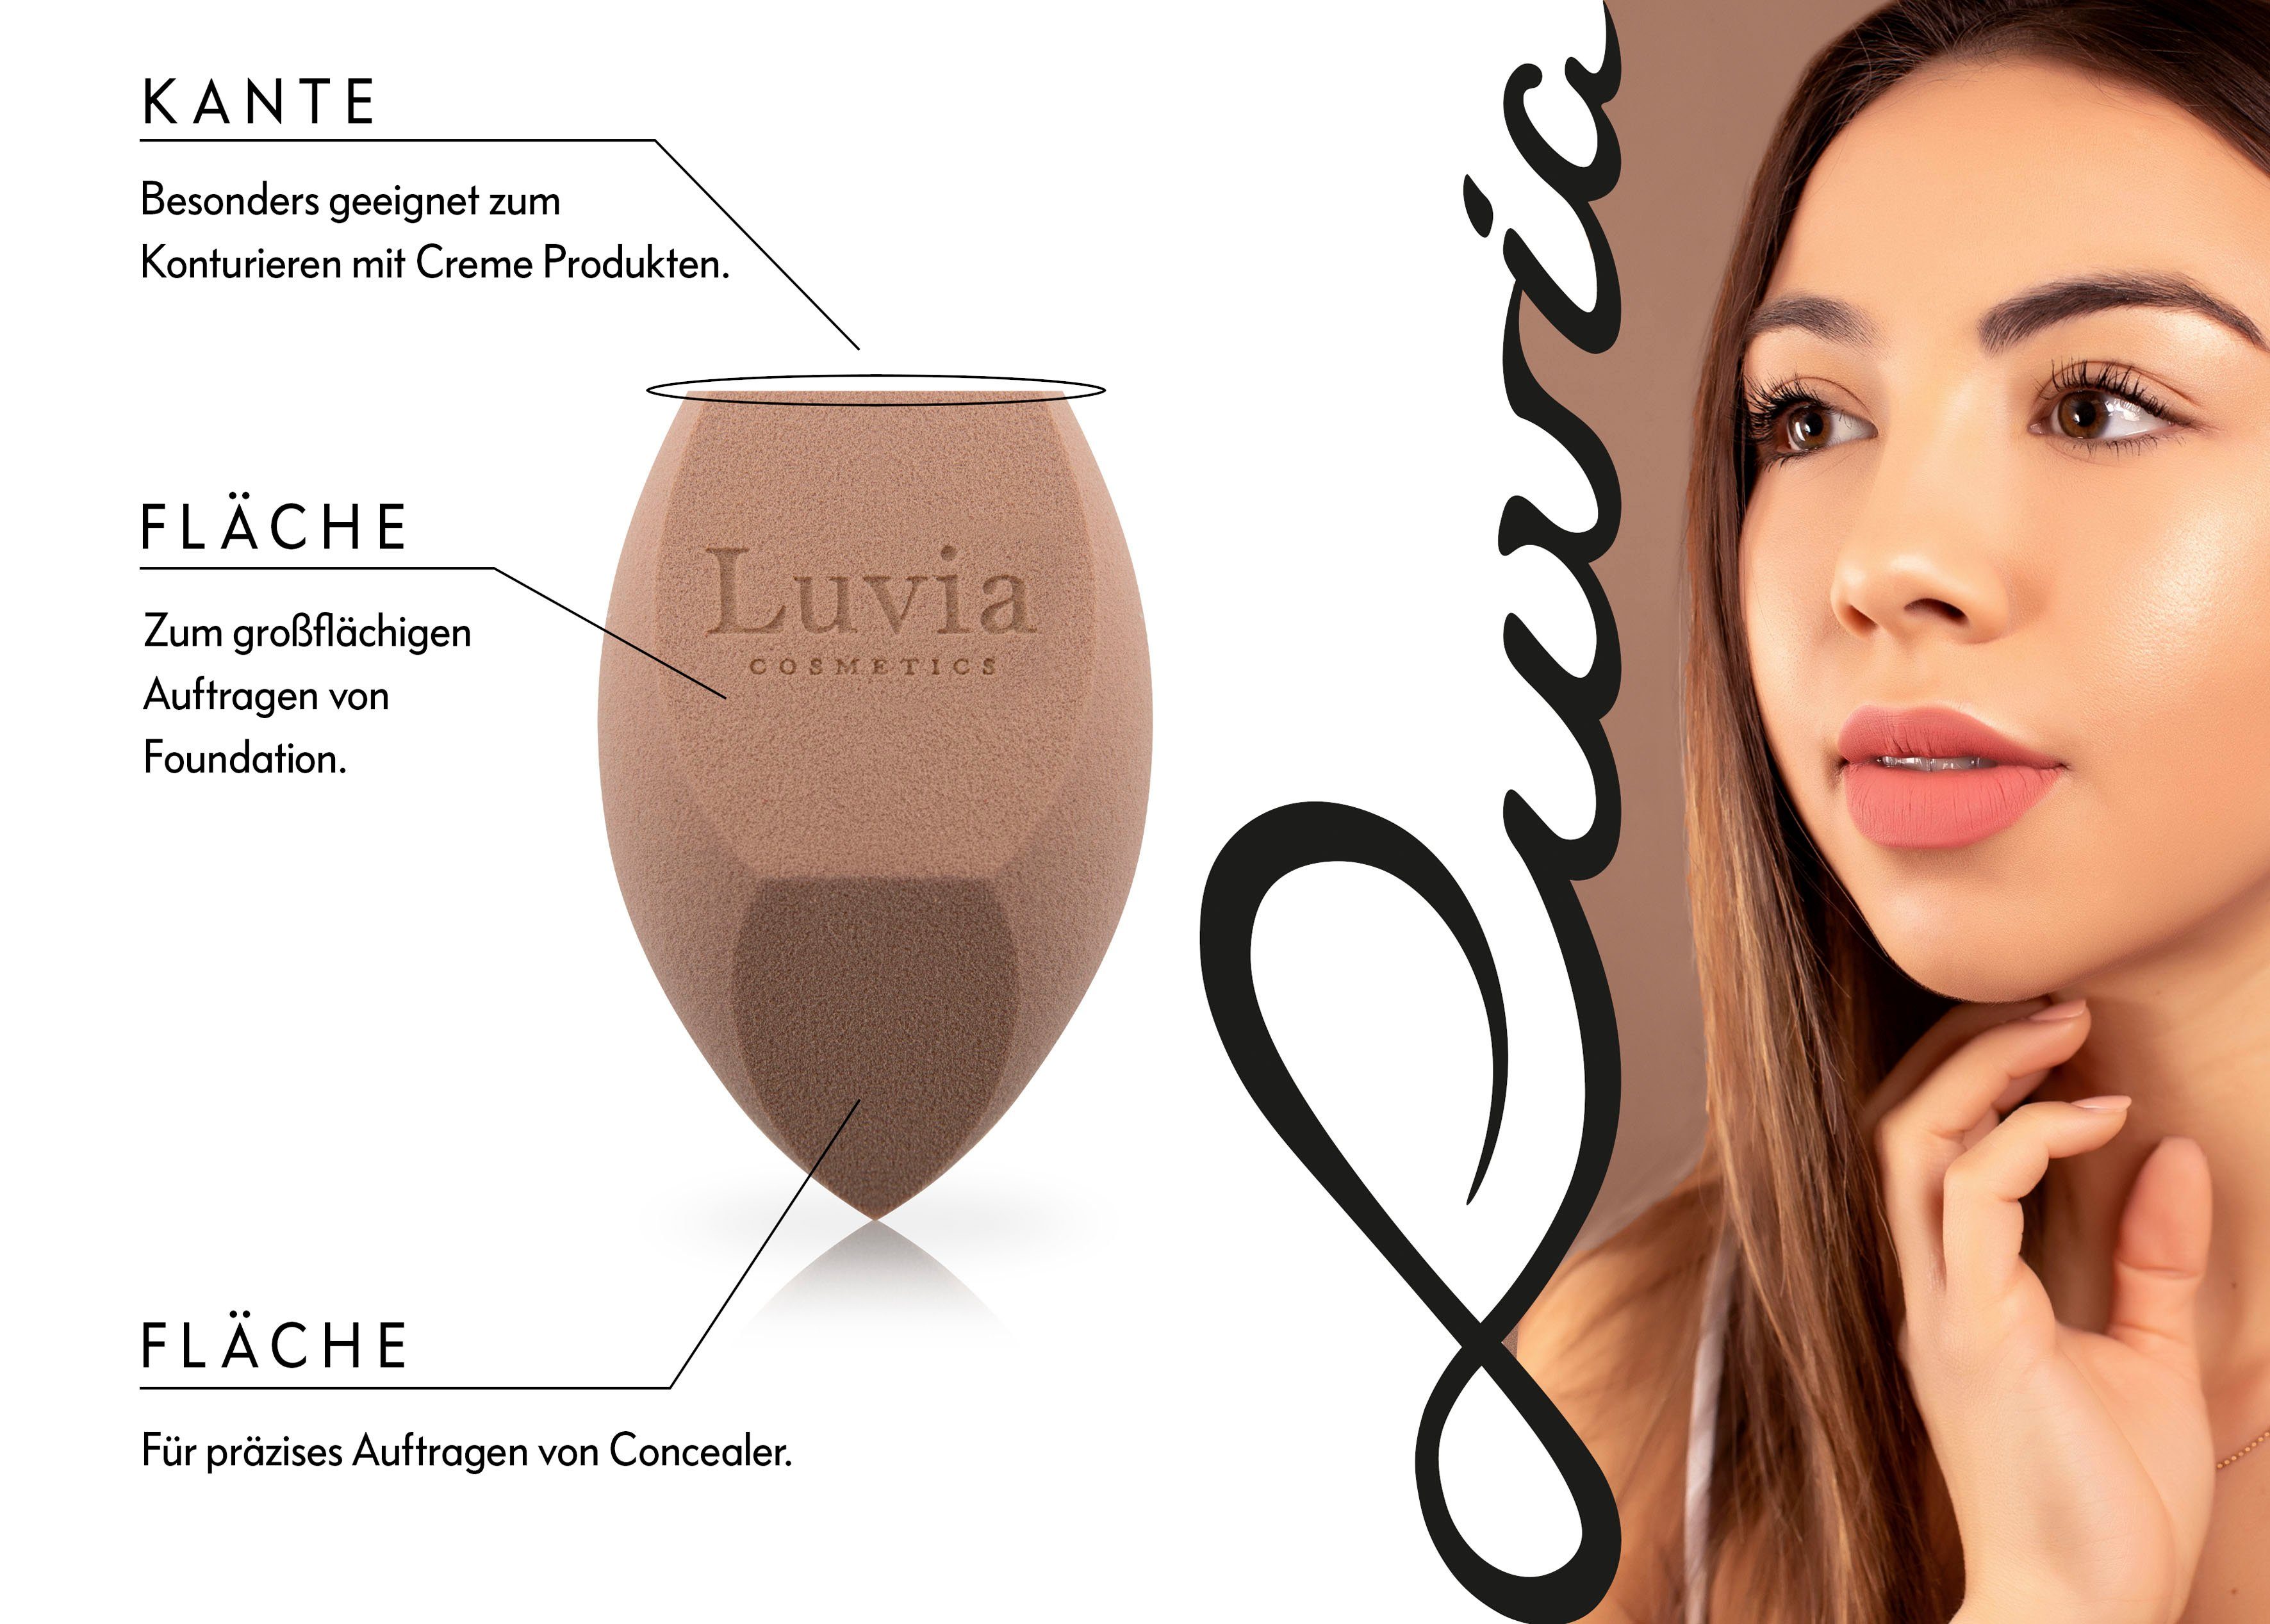 XXL Schwamm Prime Make-up Vegan Body Luvia Sponge, Schwamm Cosmetics Make-up